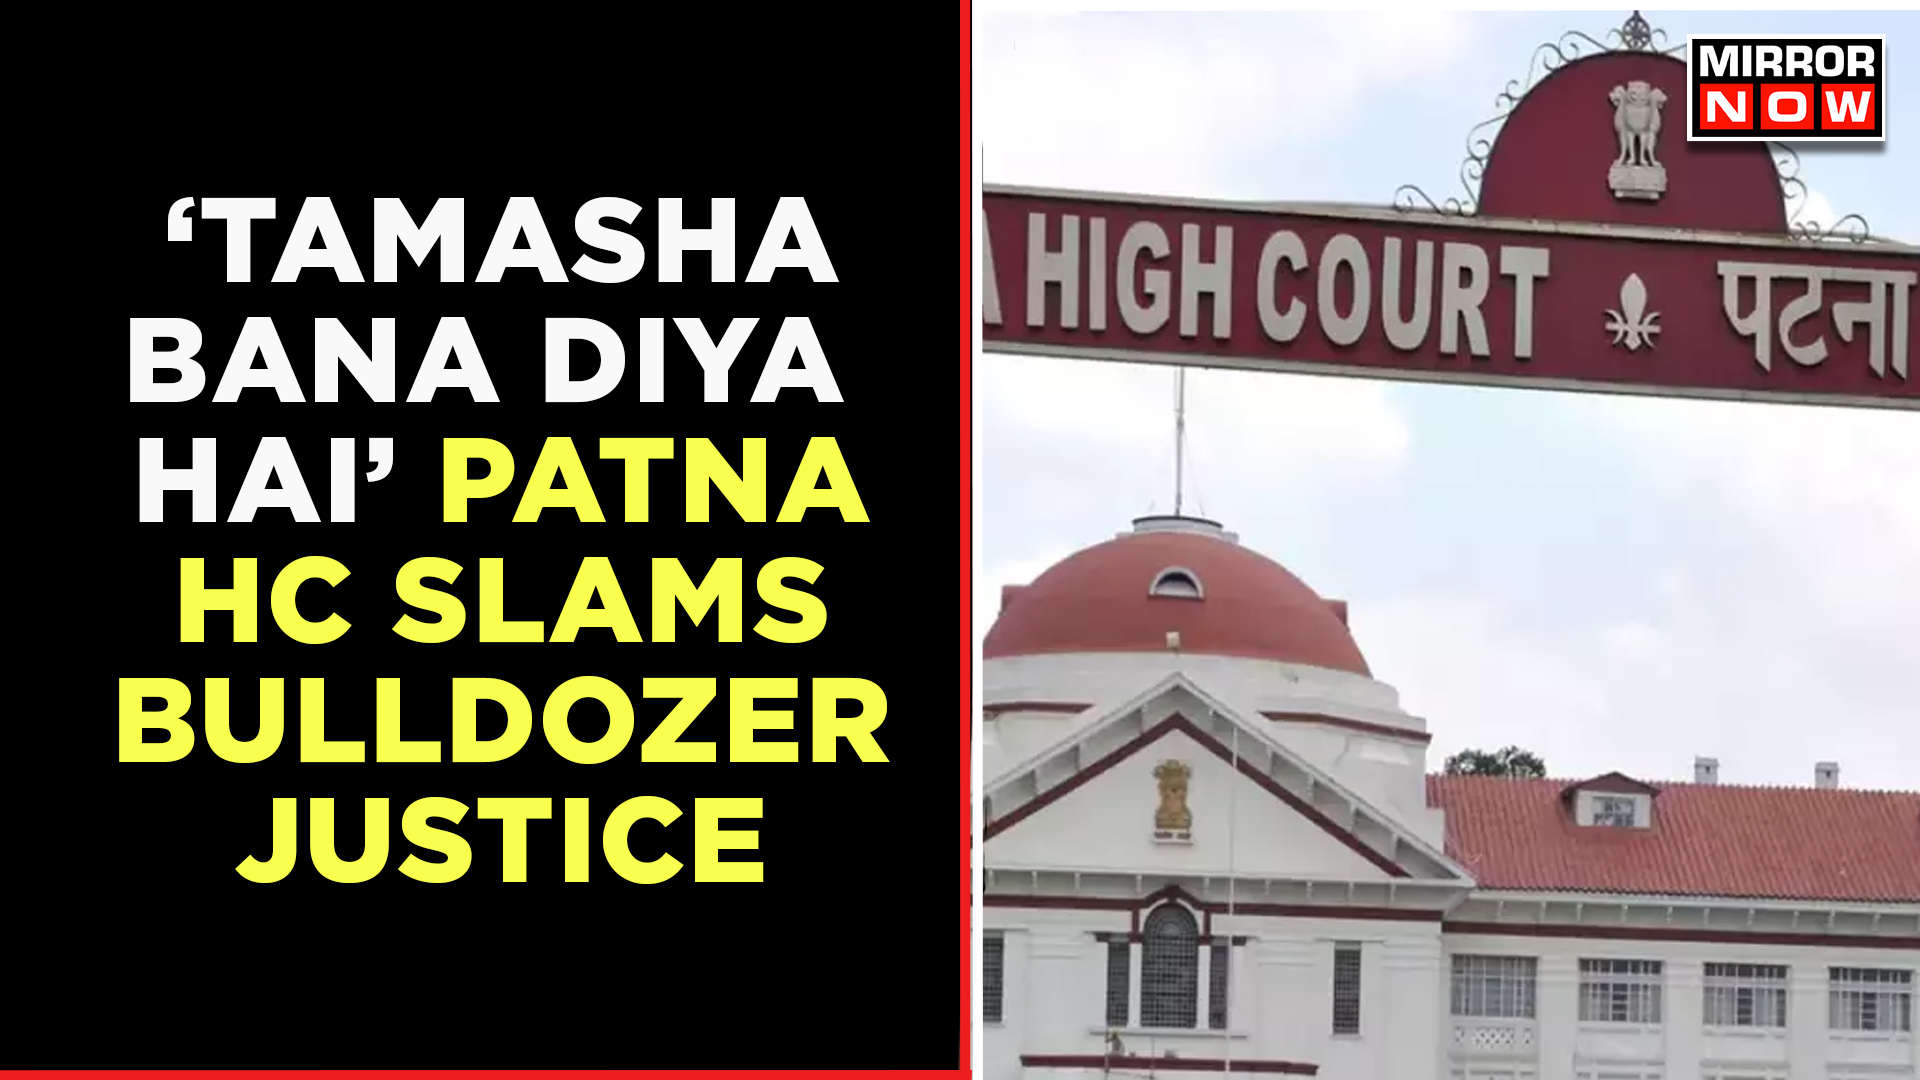 Who gave the authority...tamasha bana dia': Patna HC slams police for  bulldozing woman's house illegally